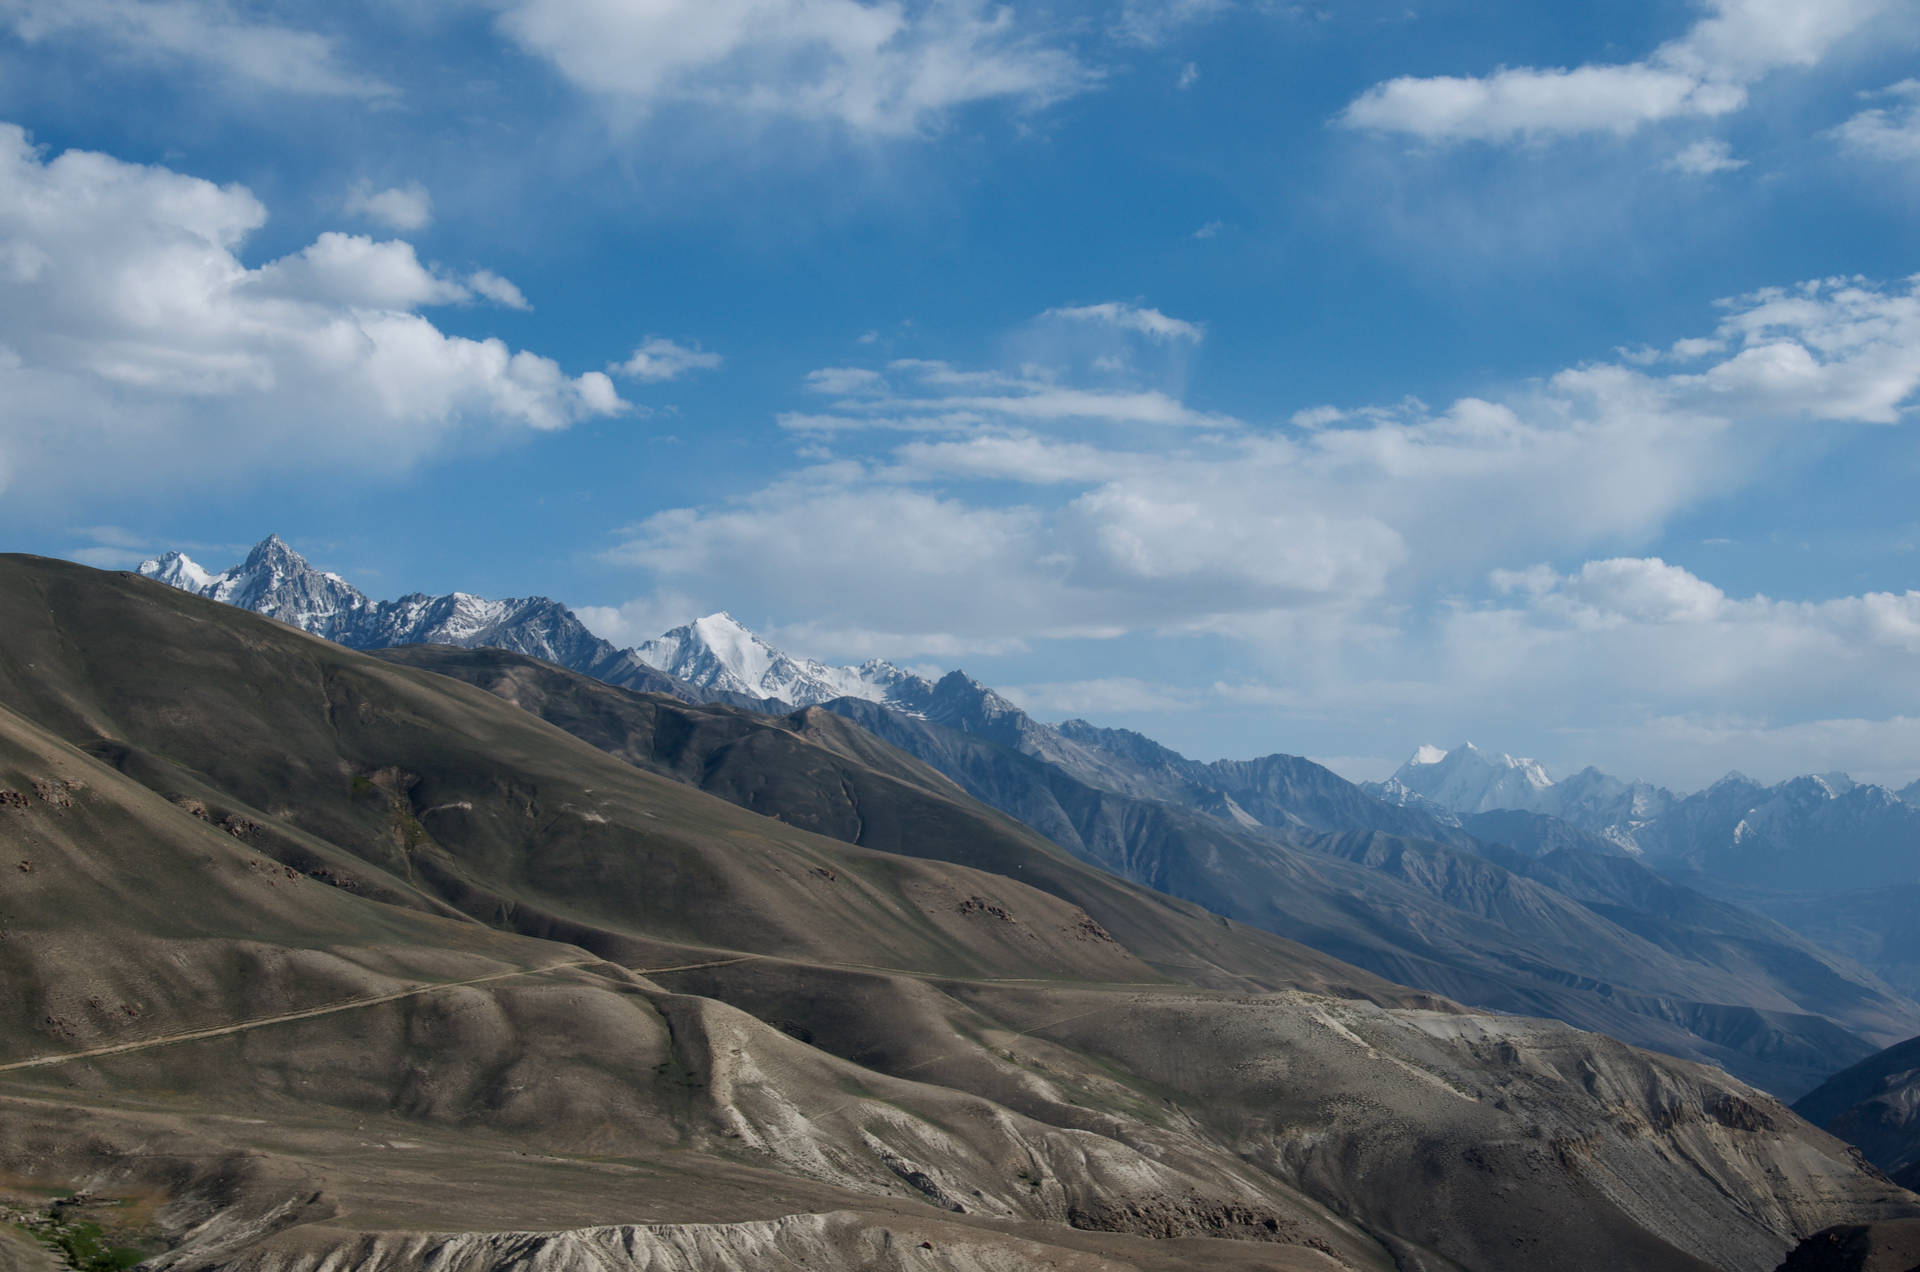 Tajikistan Rock Formation And Clouds Wallpaper